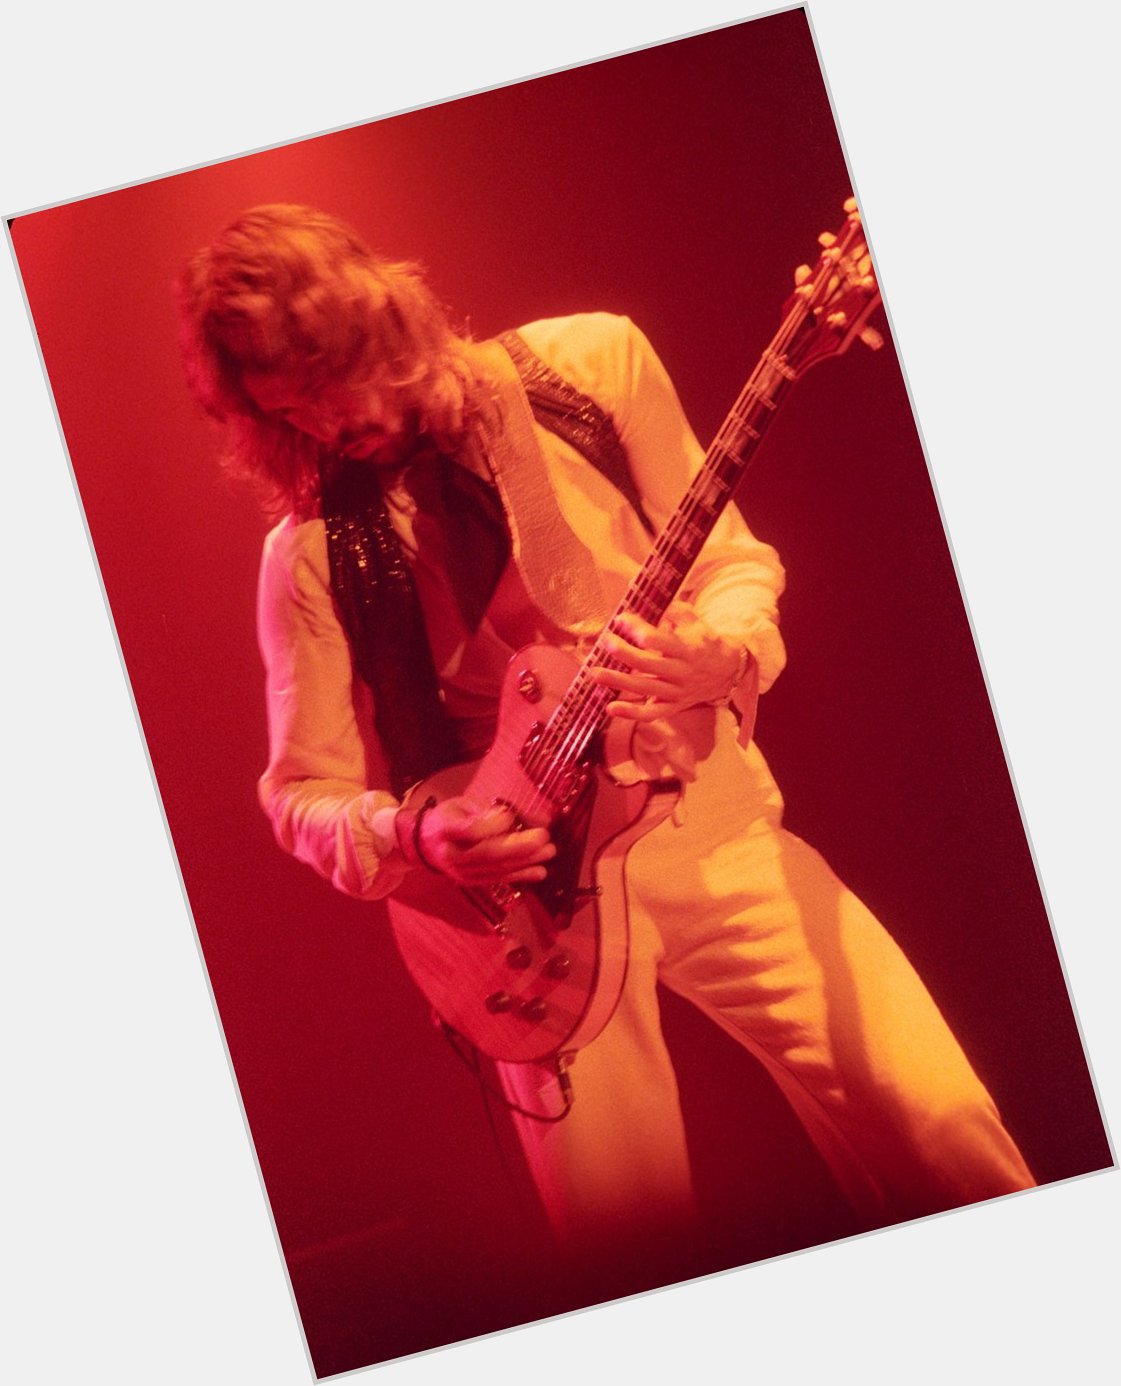 Happy Birthday Roger Fisher! Founding member of Heart and badass guitar player. Oooo, Baracuda!  